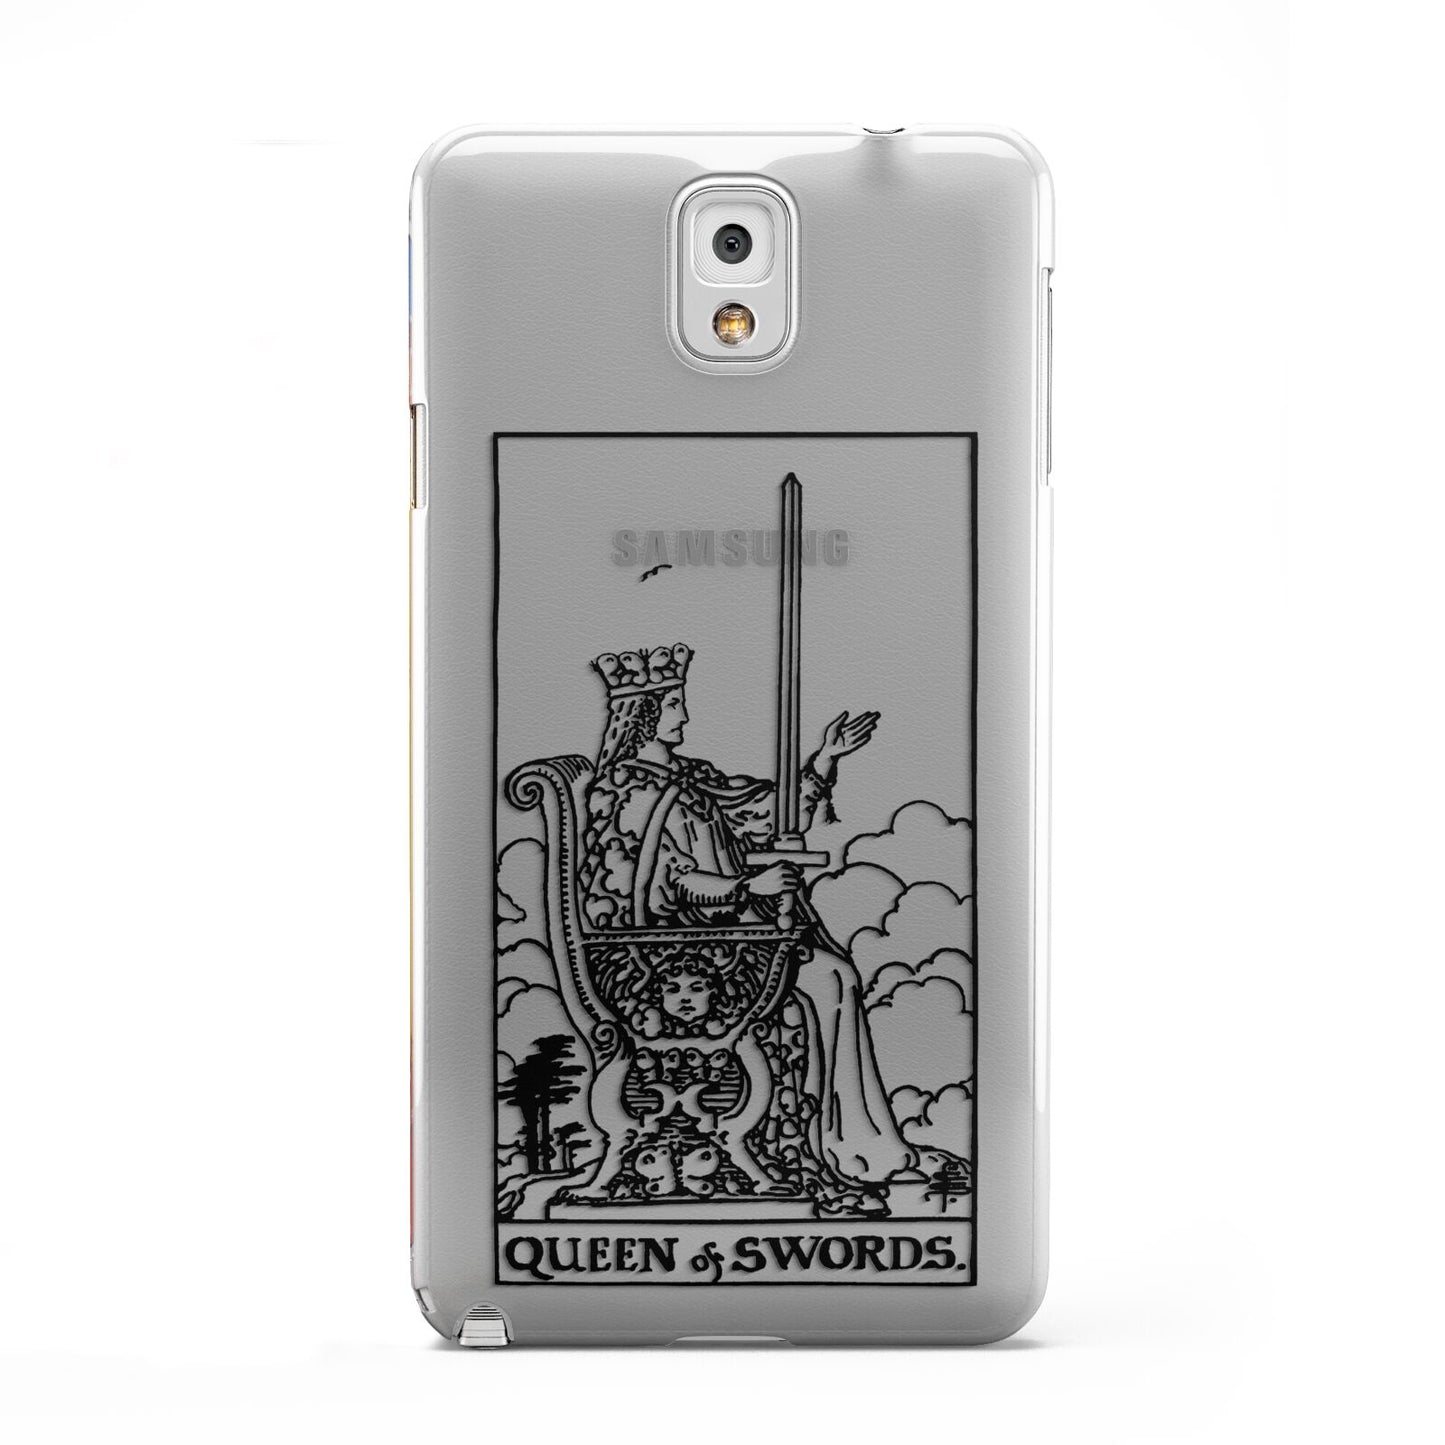 Queen of Swords Monochrome Samsung Galaxy Note 3 Case